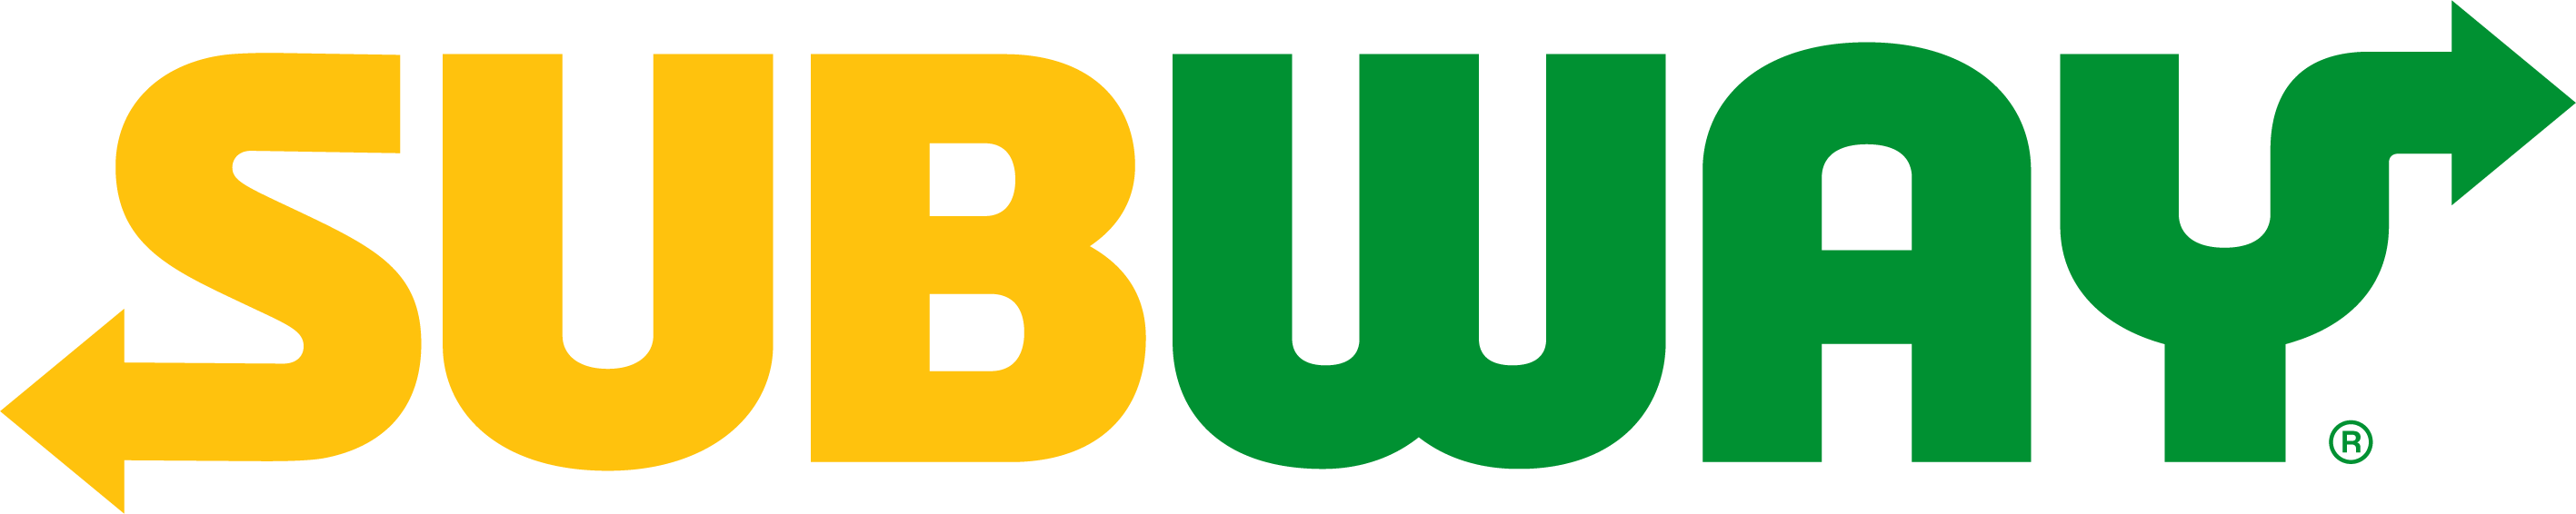 Subway Logotype yel grn RGB